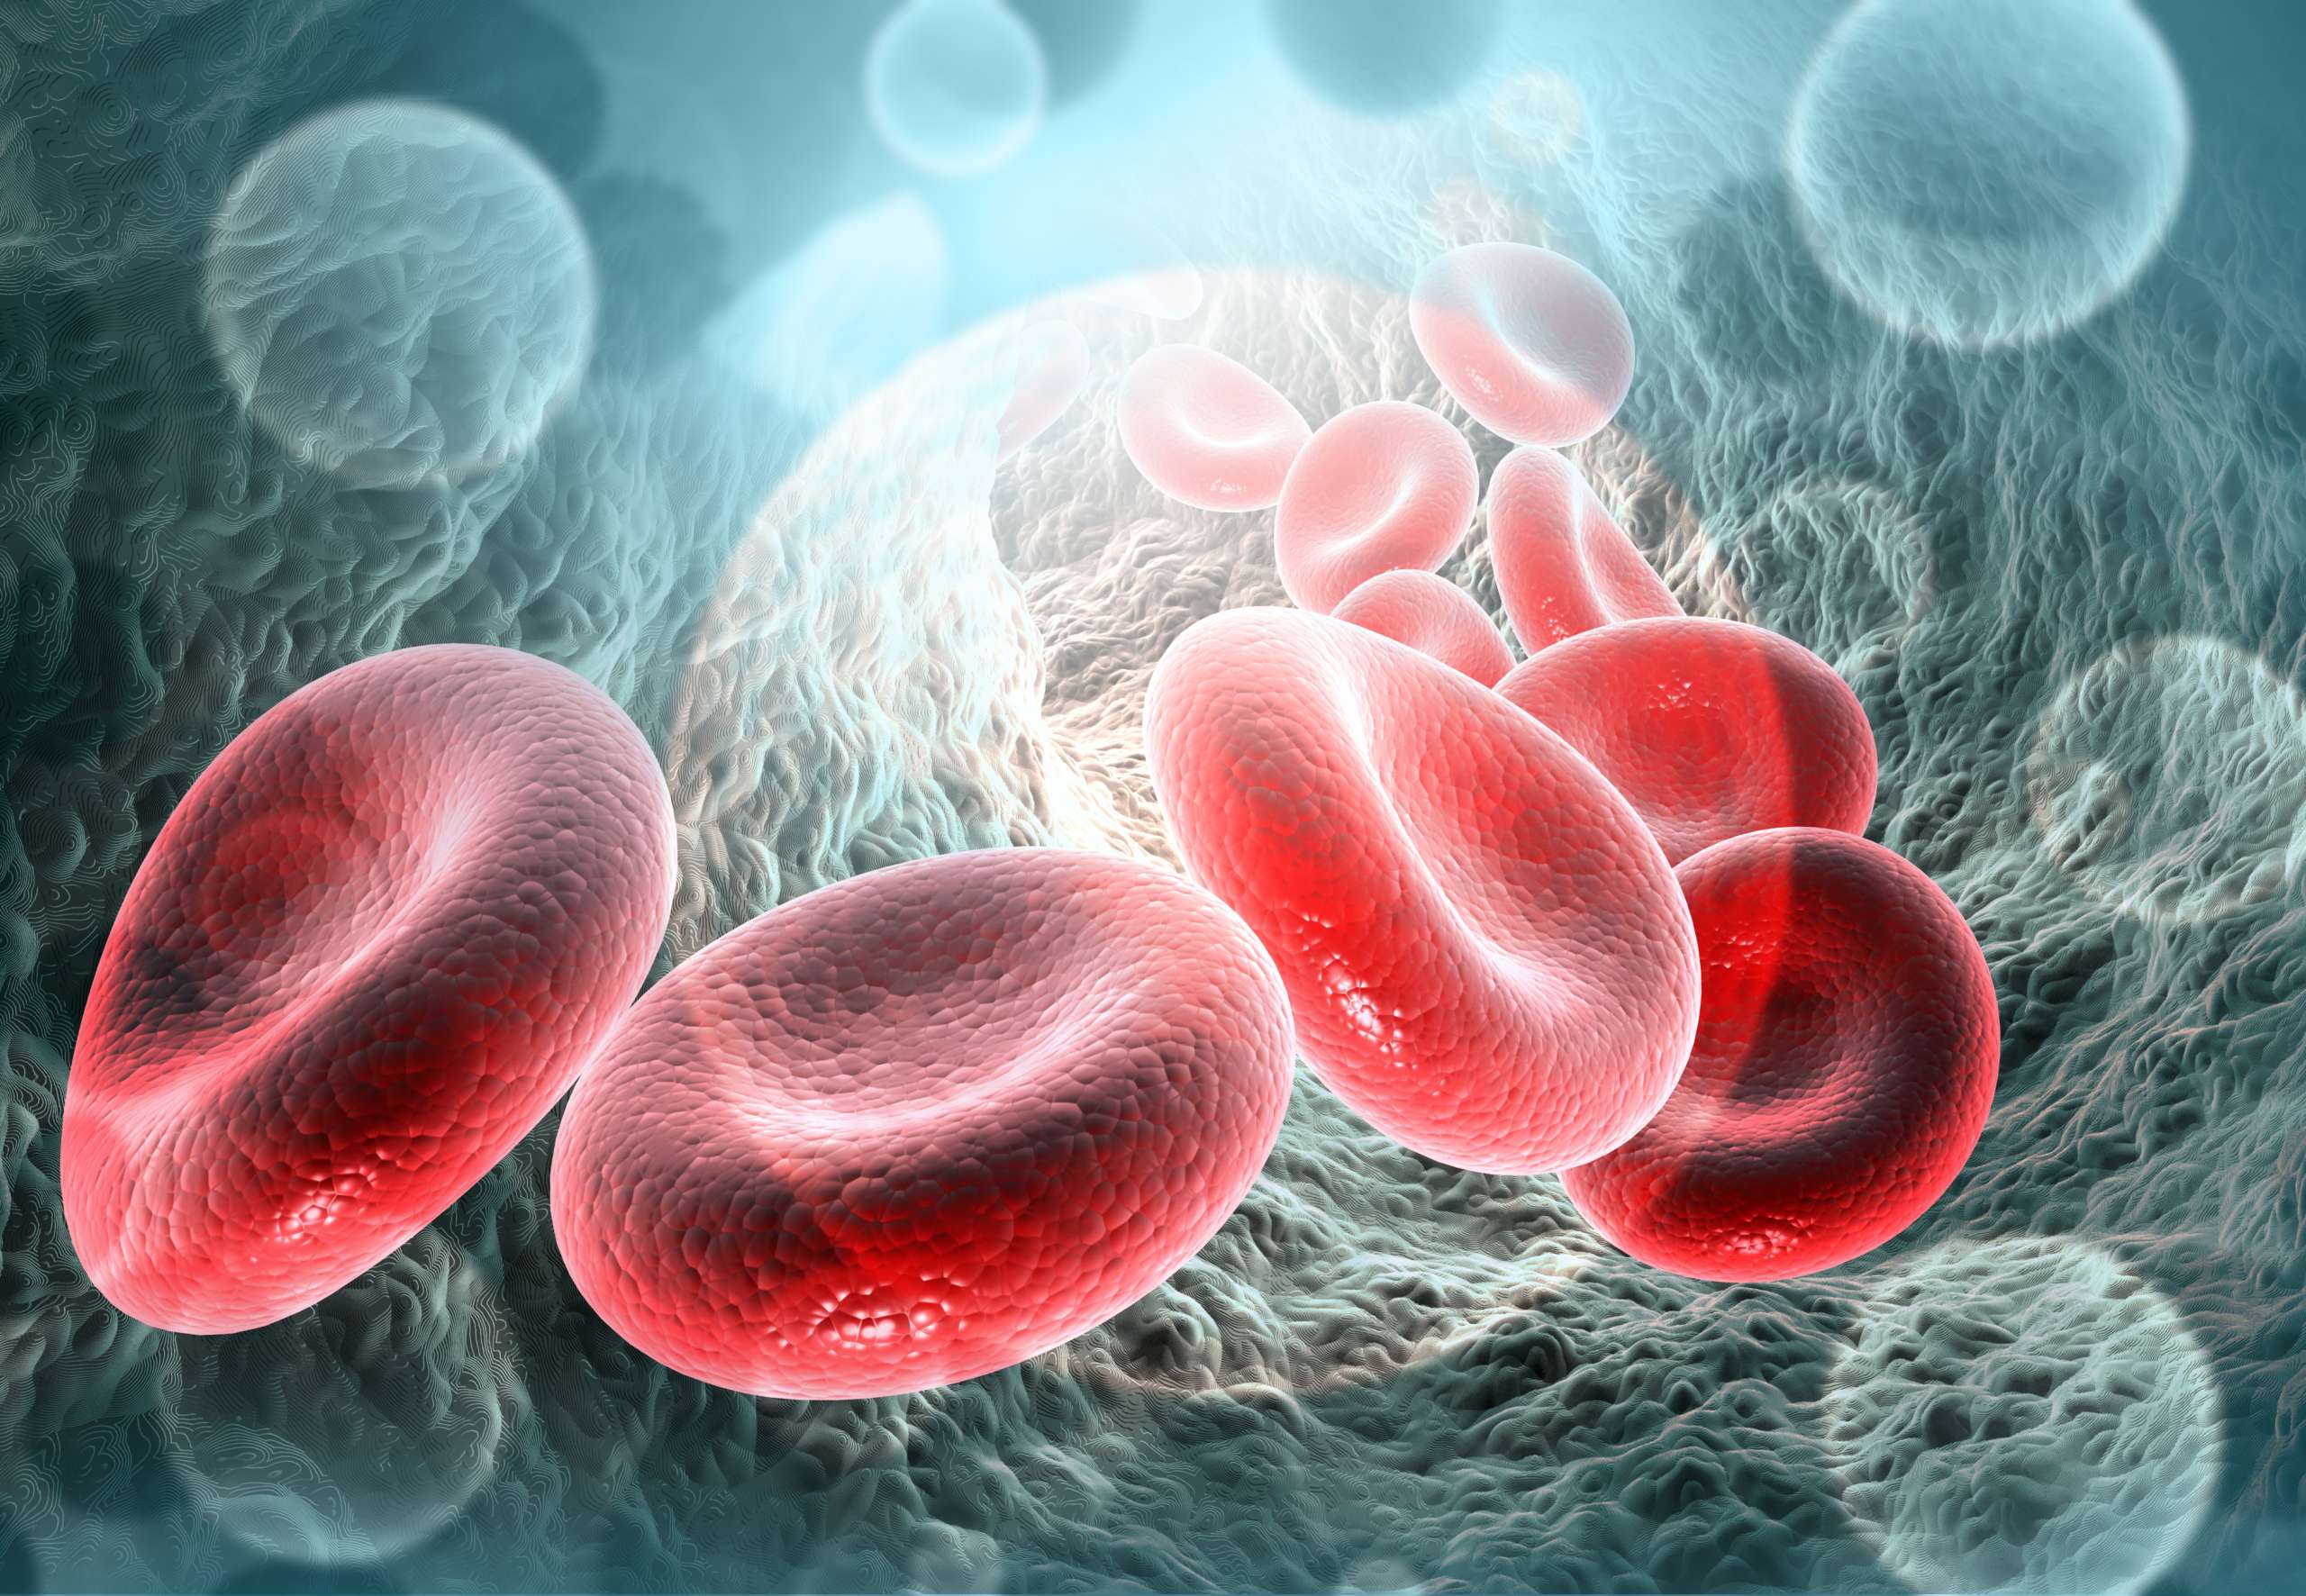 Red blood cells in vein- Immune System In Fertility